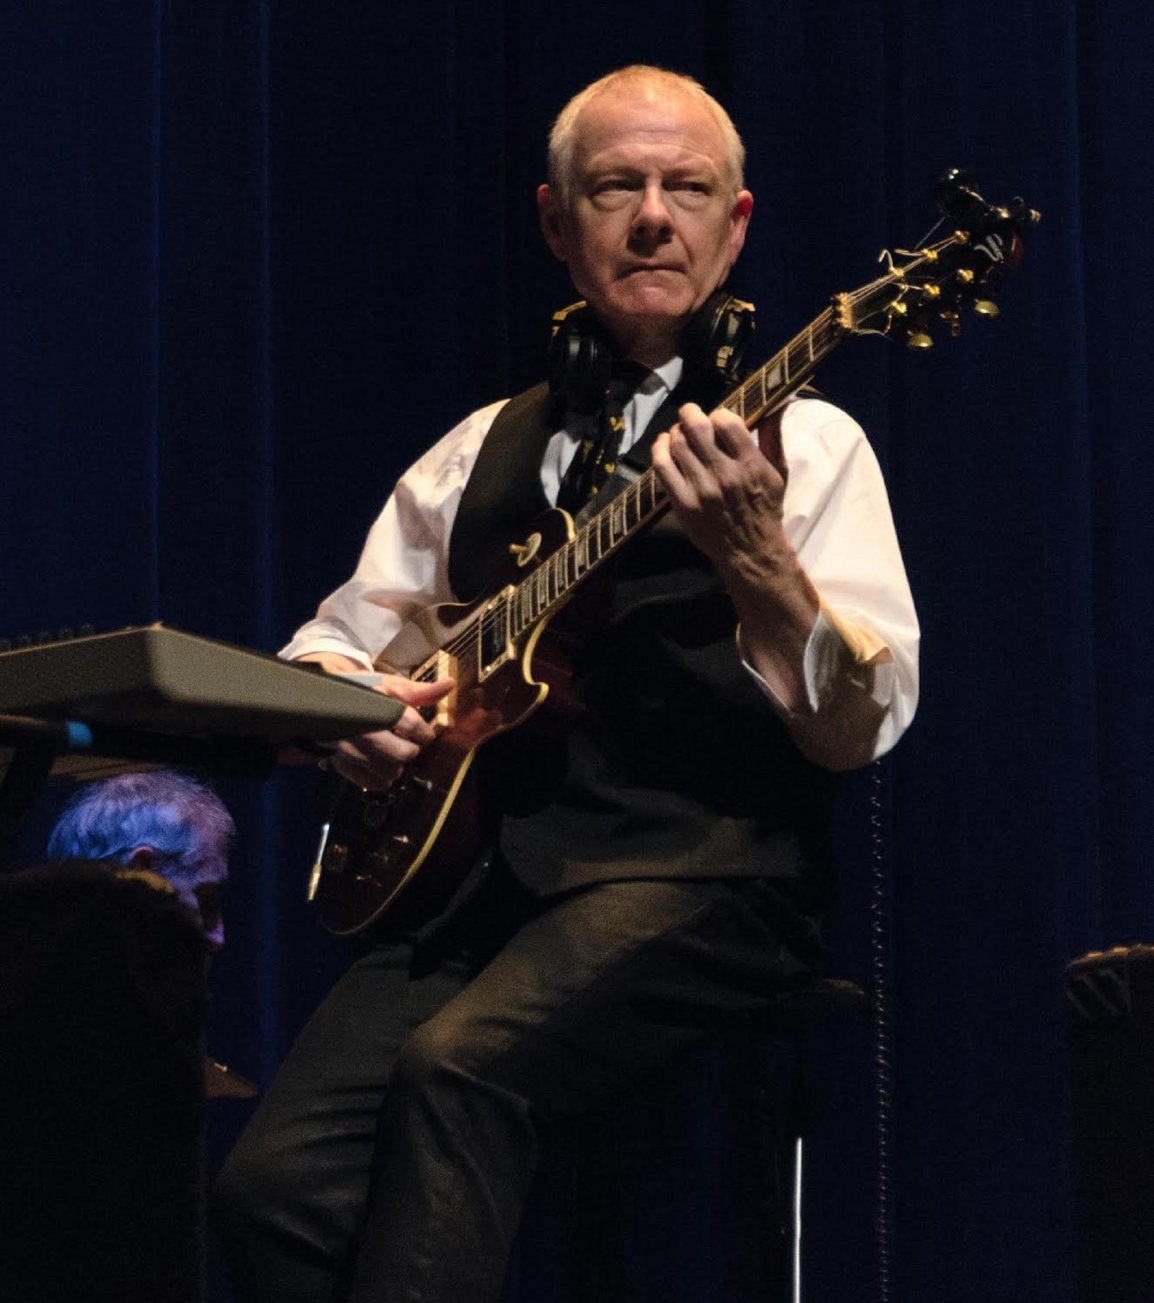 Concert Review: King Crimson at The Met in Philadelphia, PA (09/23/2019)